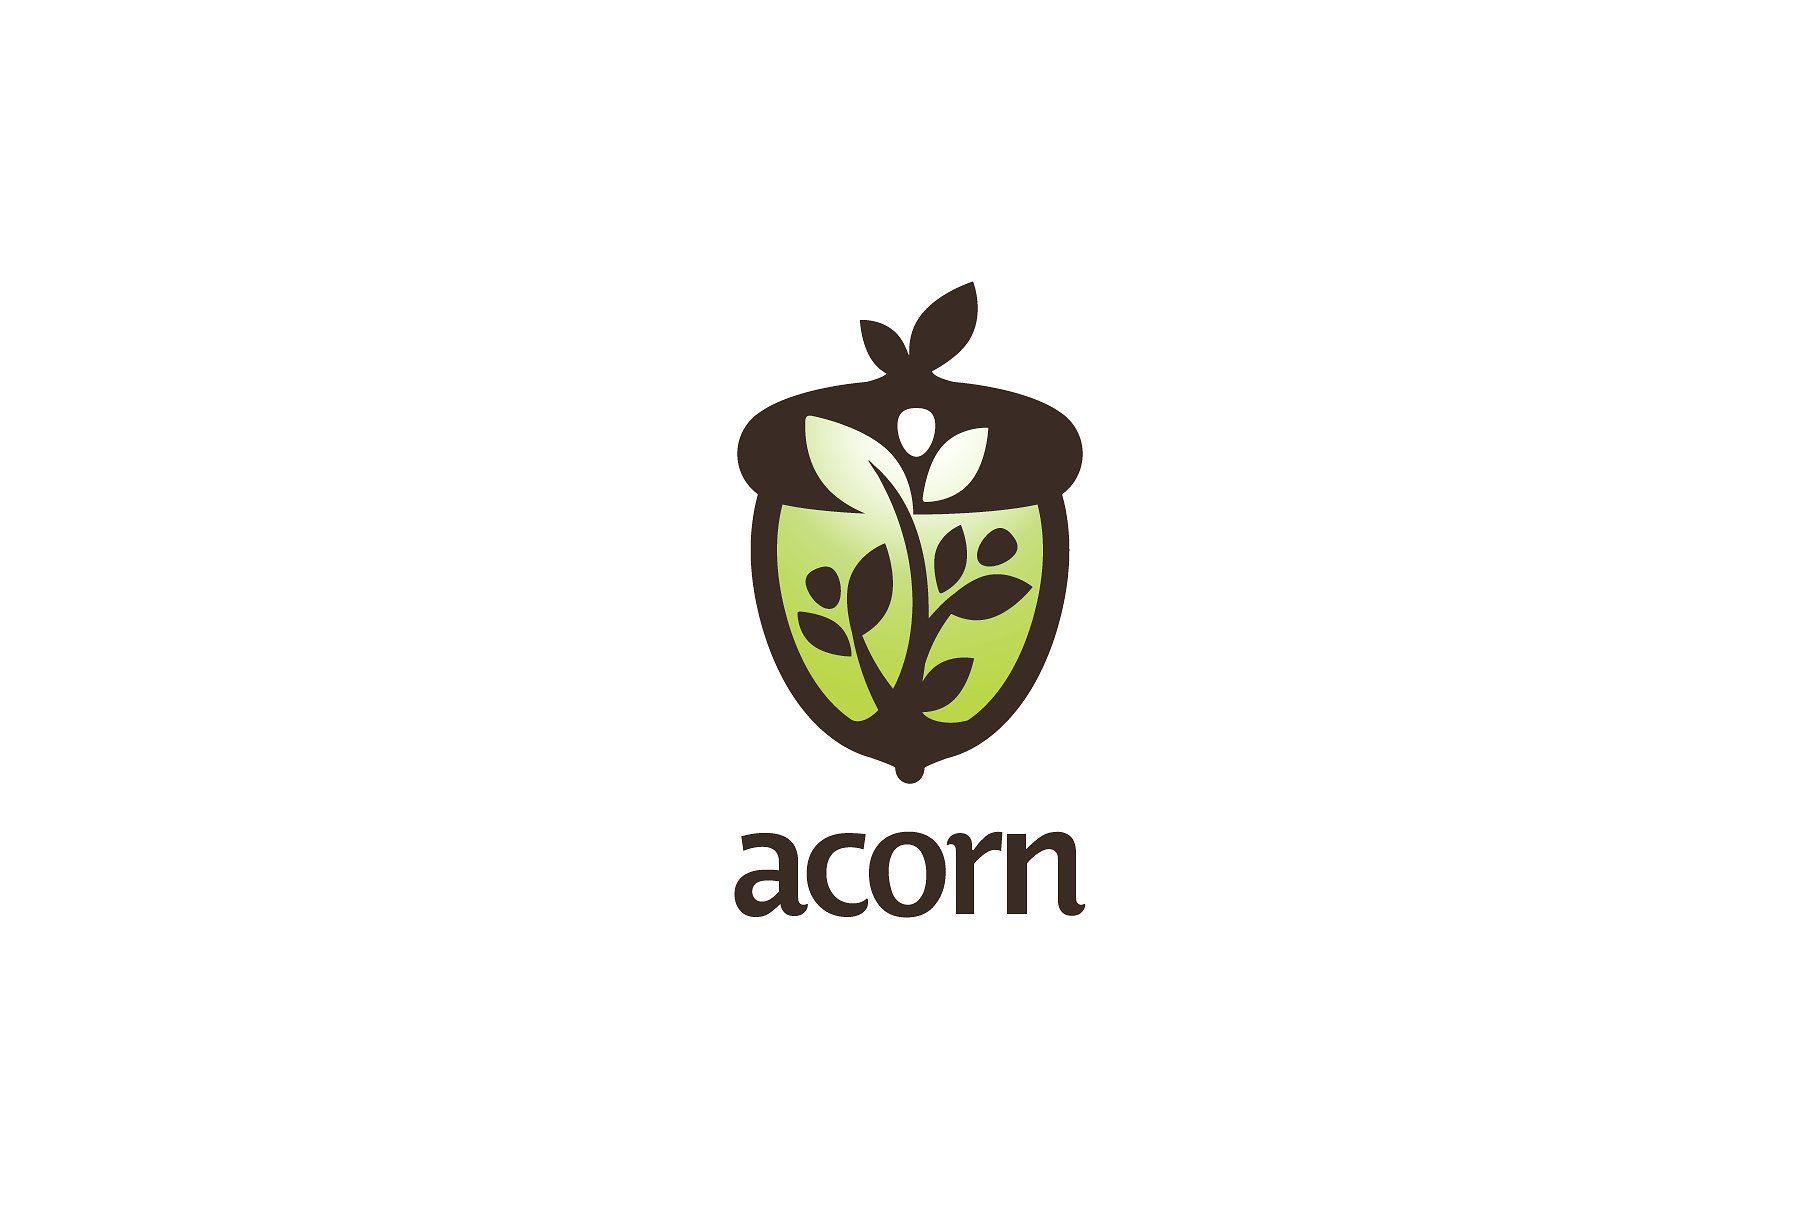 Acorn Logo - Acorn Financial Growth logo Logo Templates Creative Market